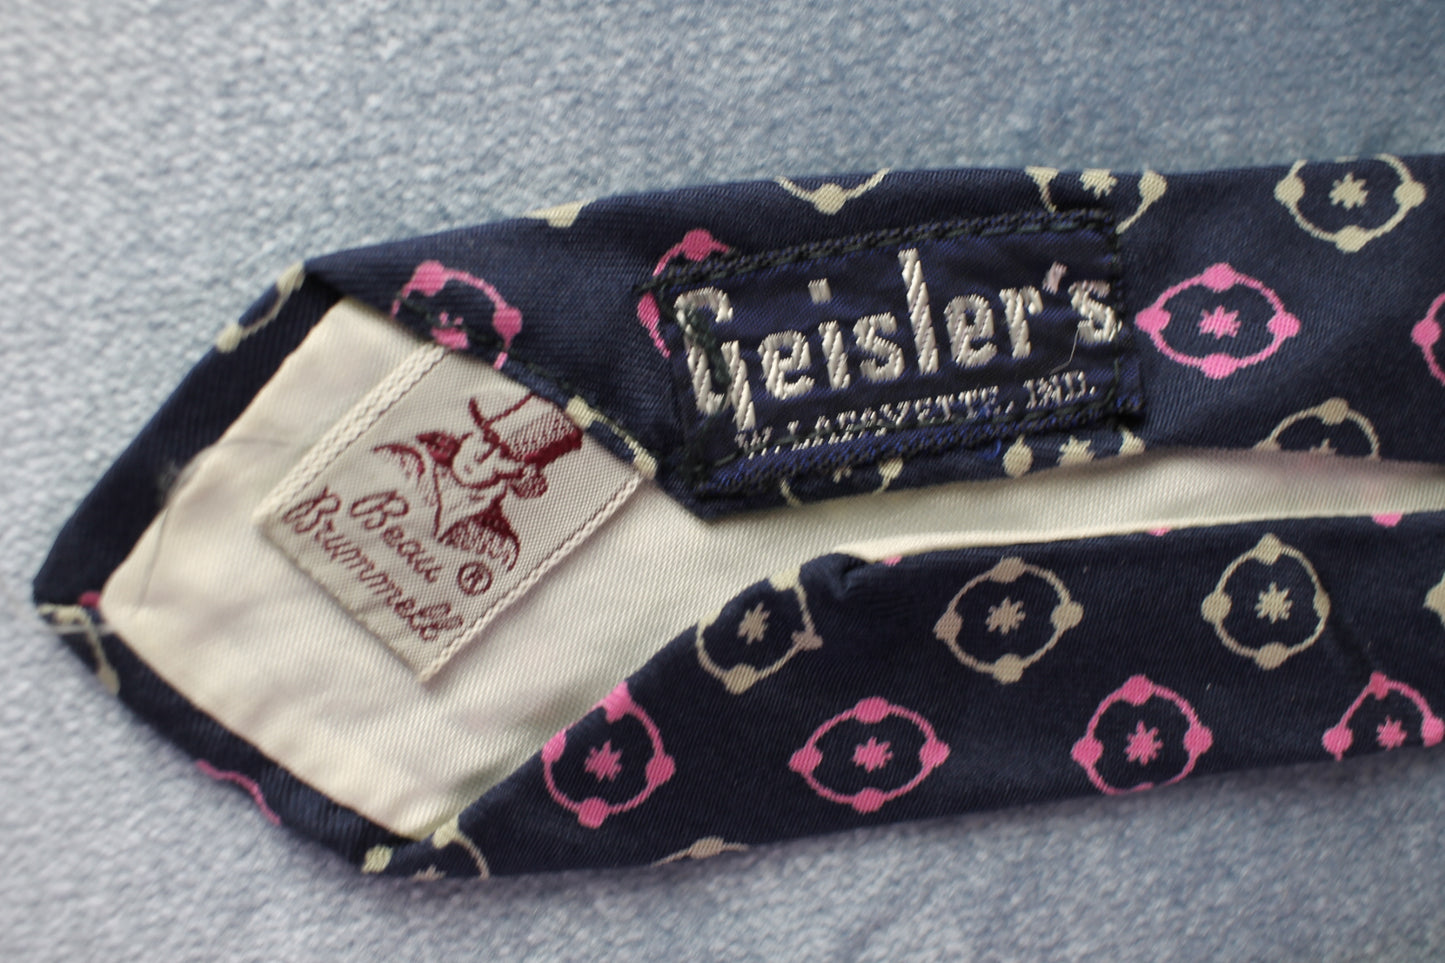 Vintage Geislers dark blue pink cream square circles pattern tie